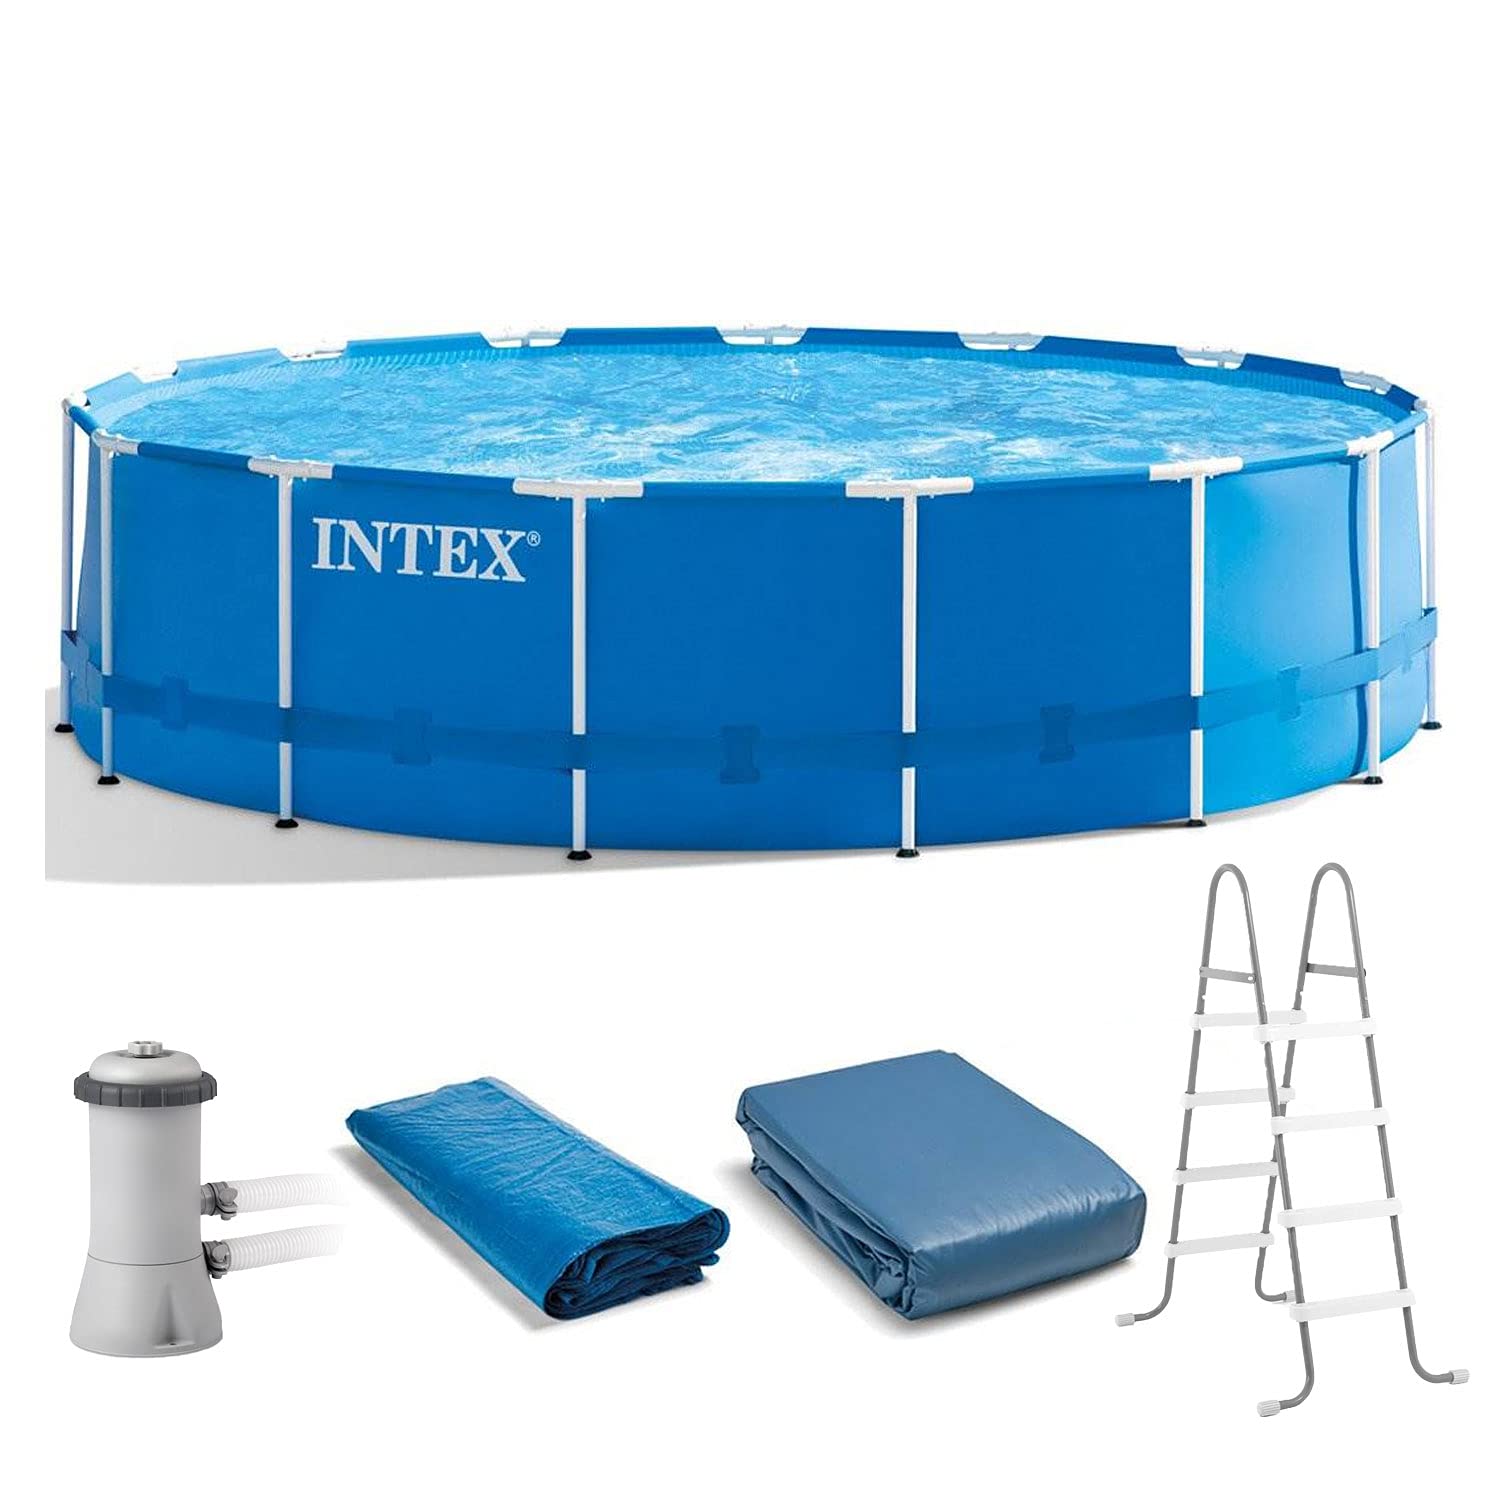 Intex Metal Frame Pool Set, 15-Feet by 48-Inch